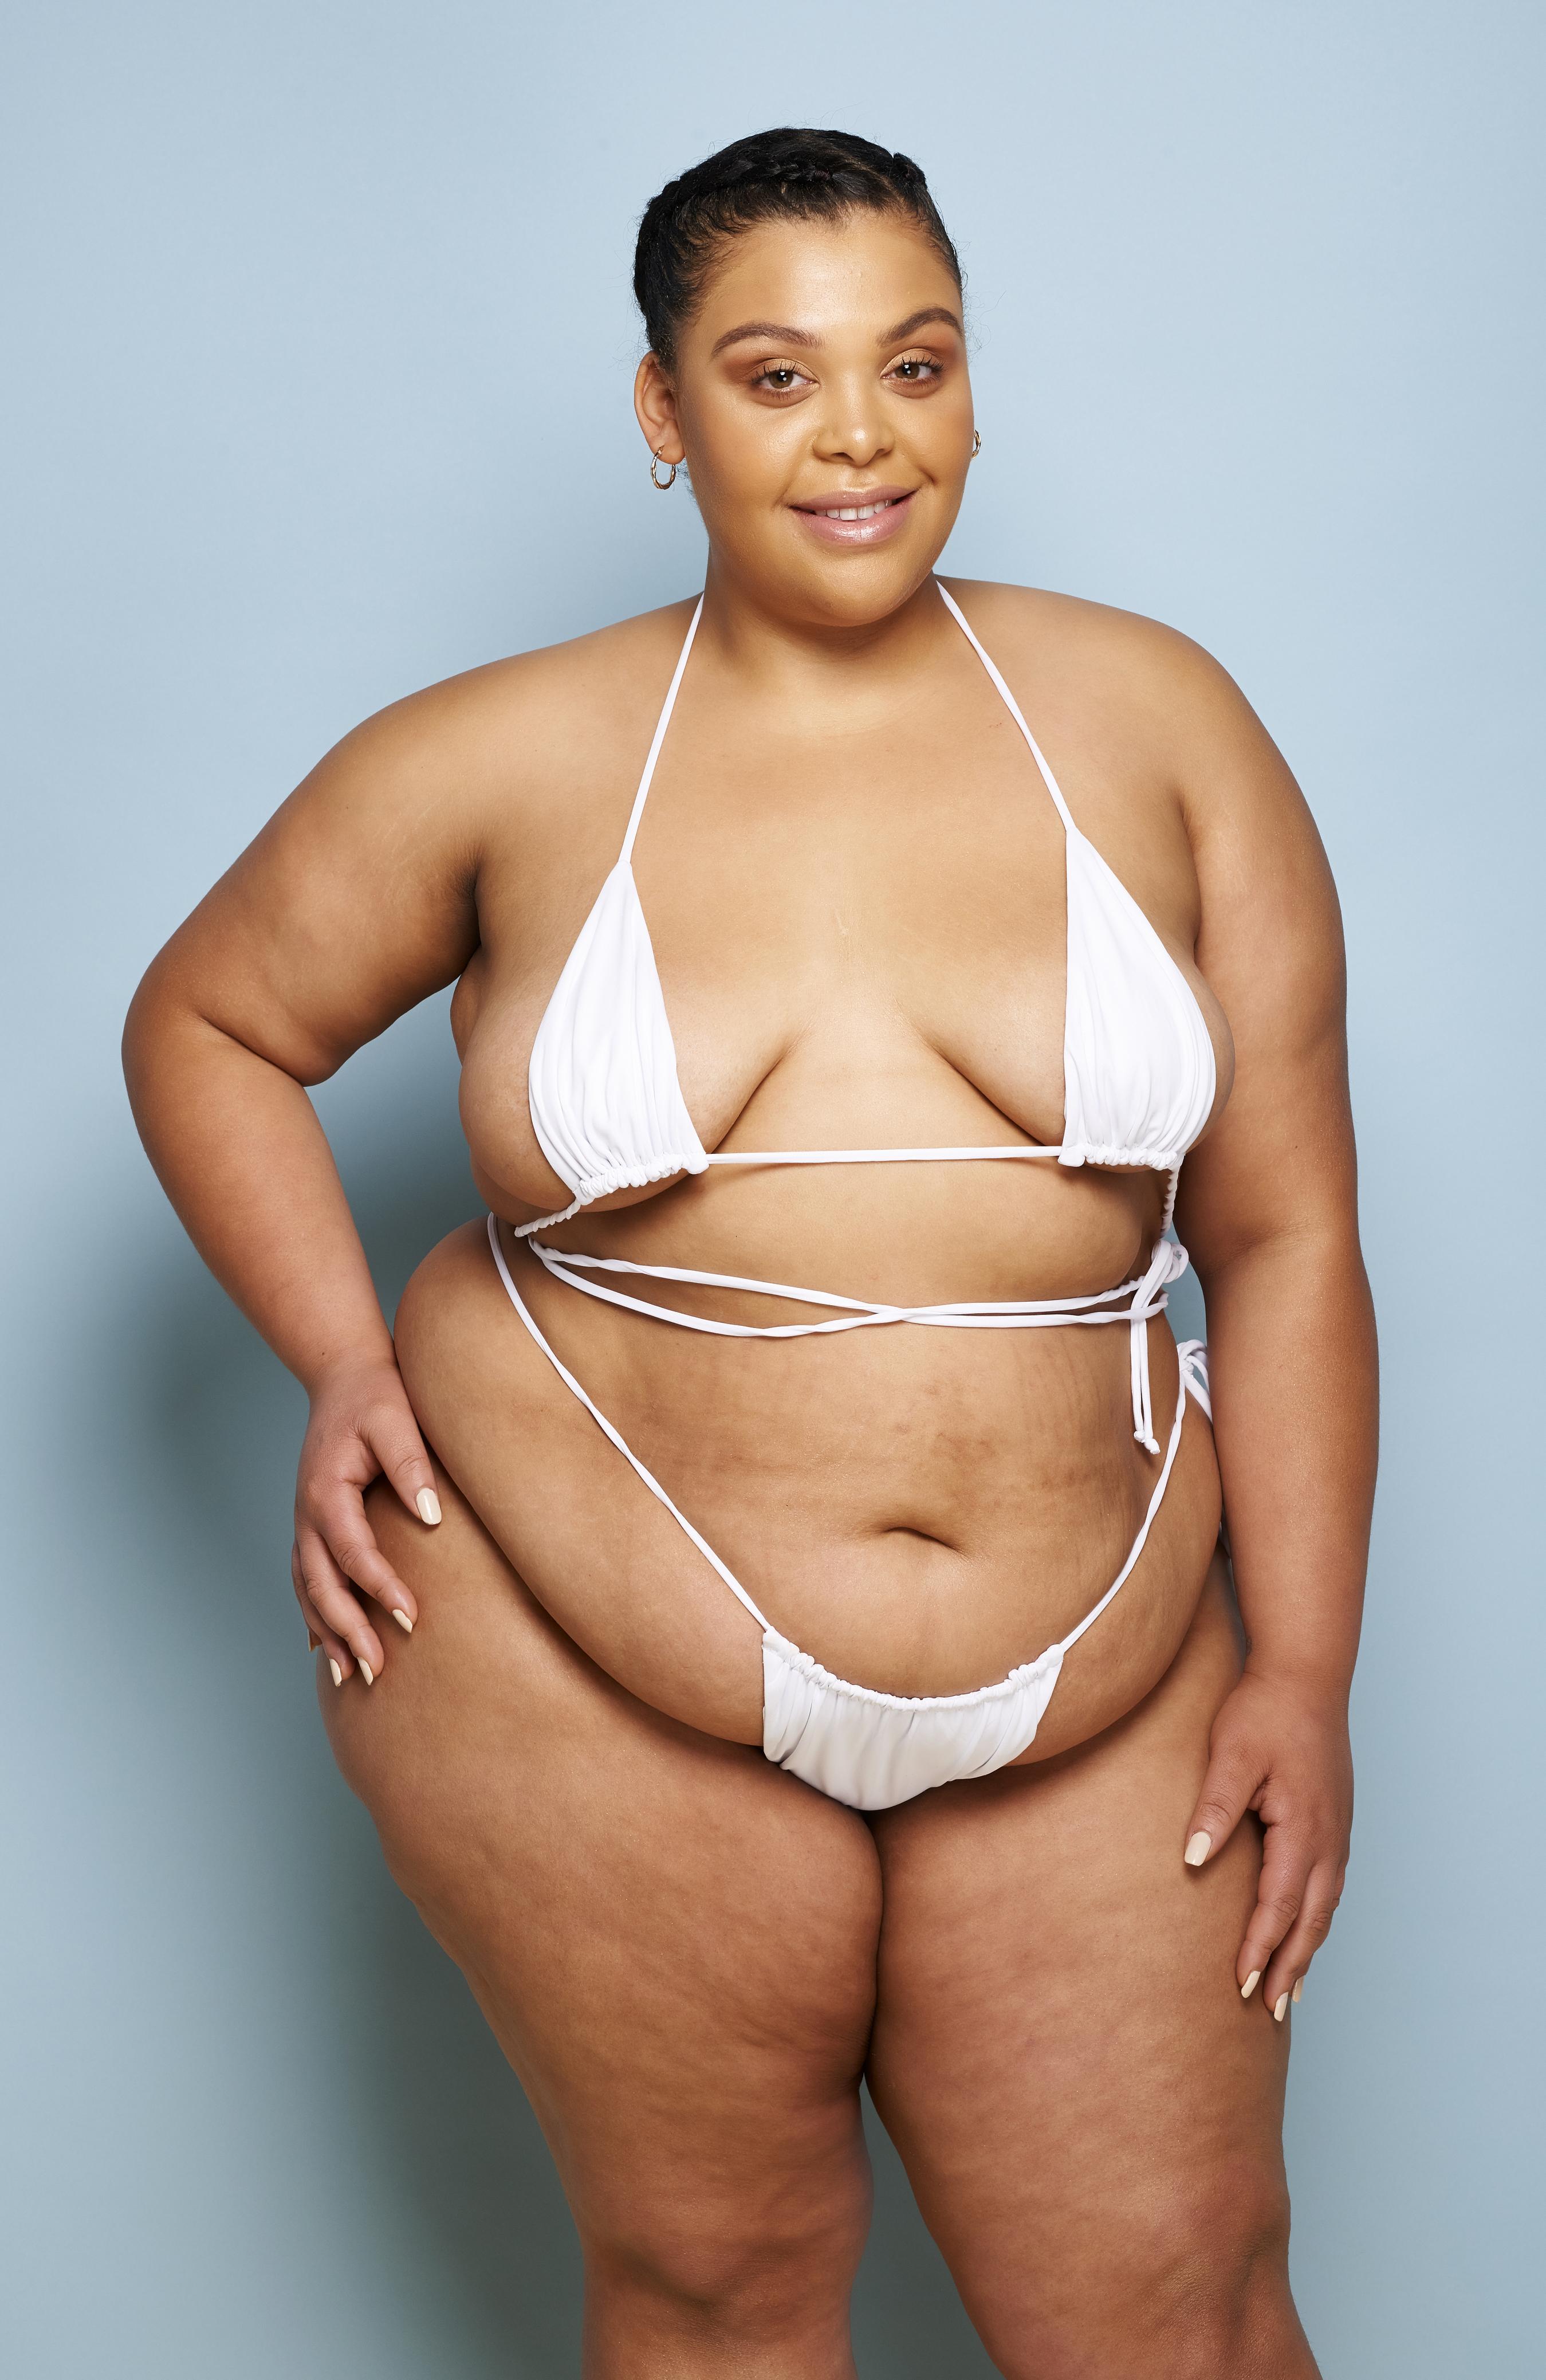 barbara wolfram recommends big lady in bikini pic